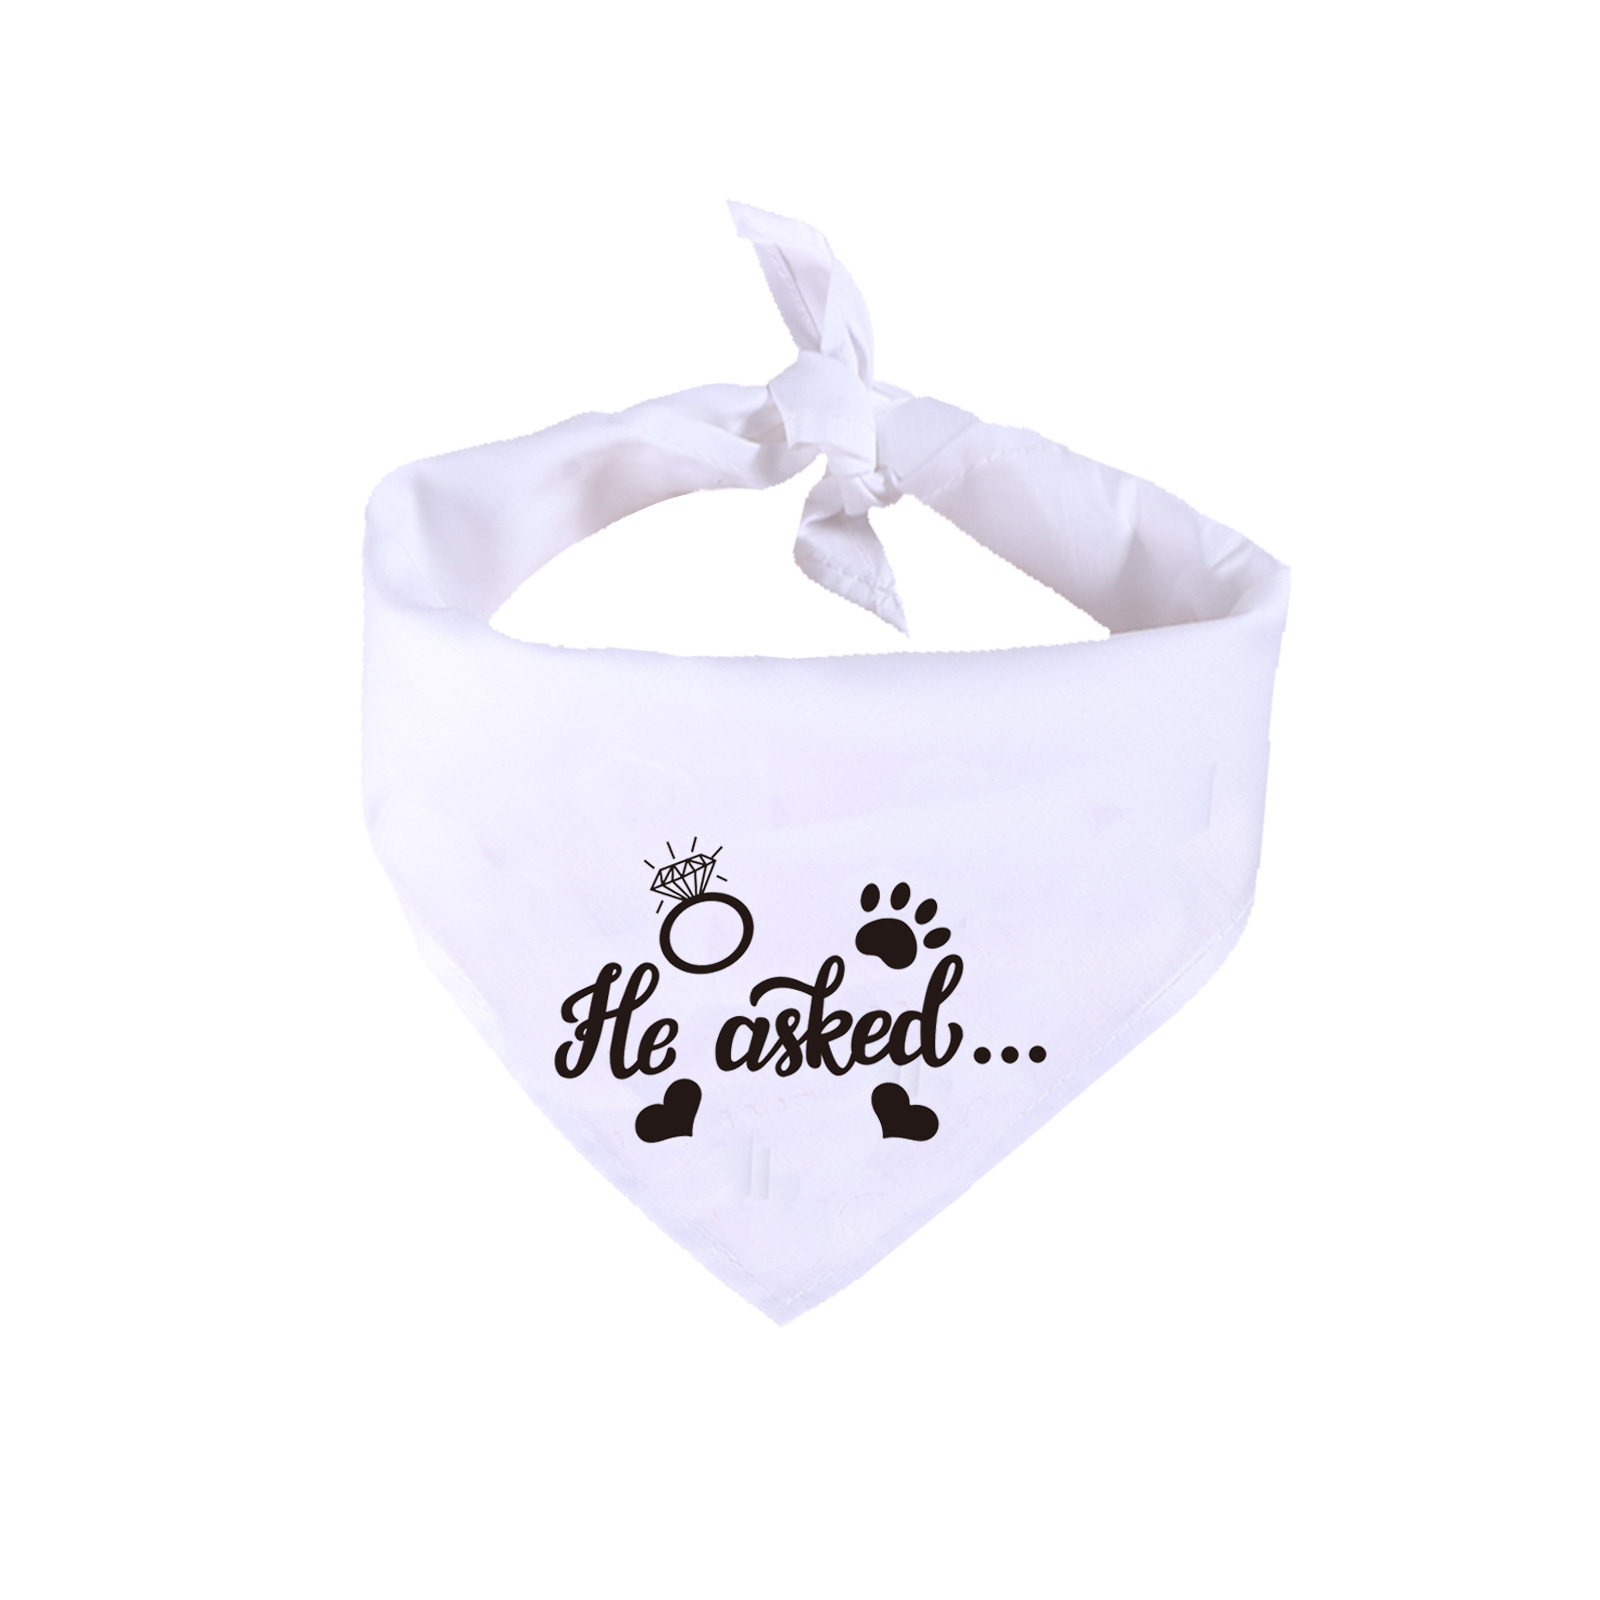 477bcdfe 341e 41b5 86fe f24d7e895e36 - White Valentine's Day Saliva Towel Dog Wedding Jewelry